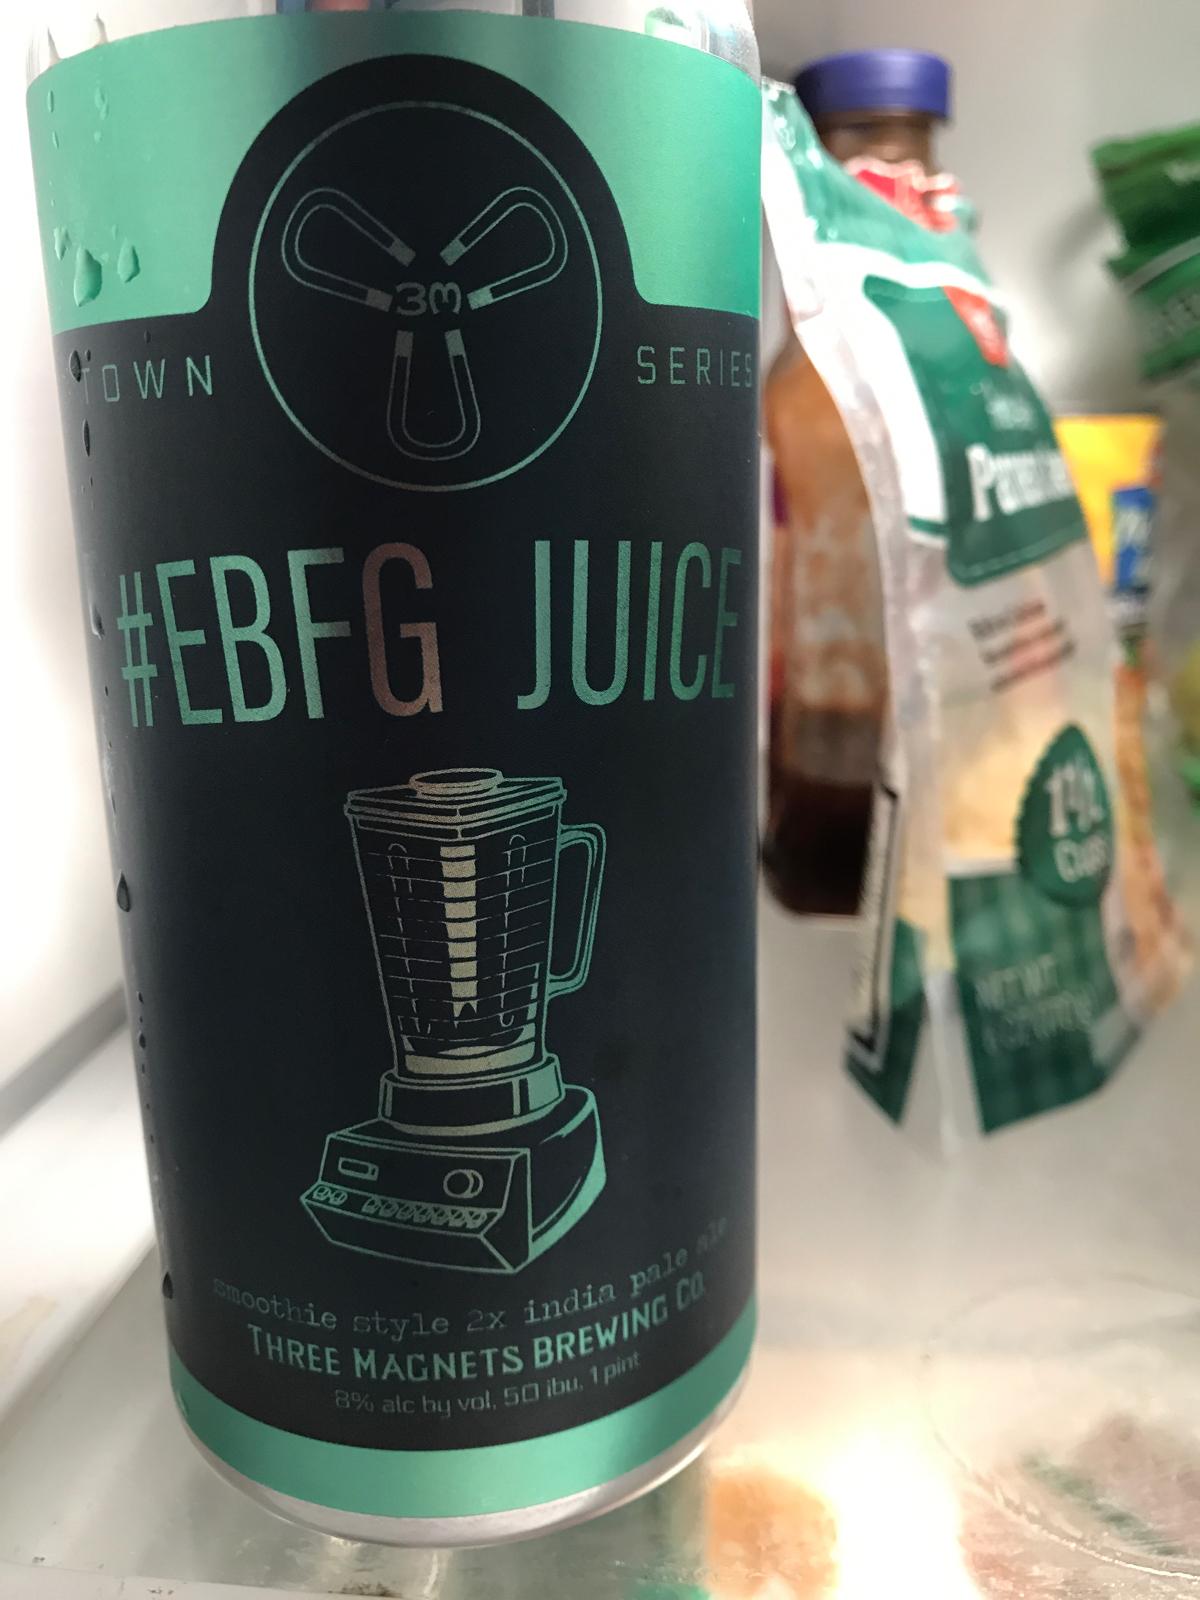 #EBFG Juice IPA